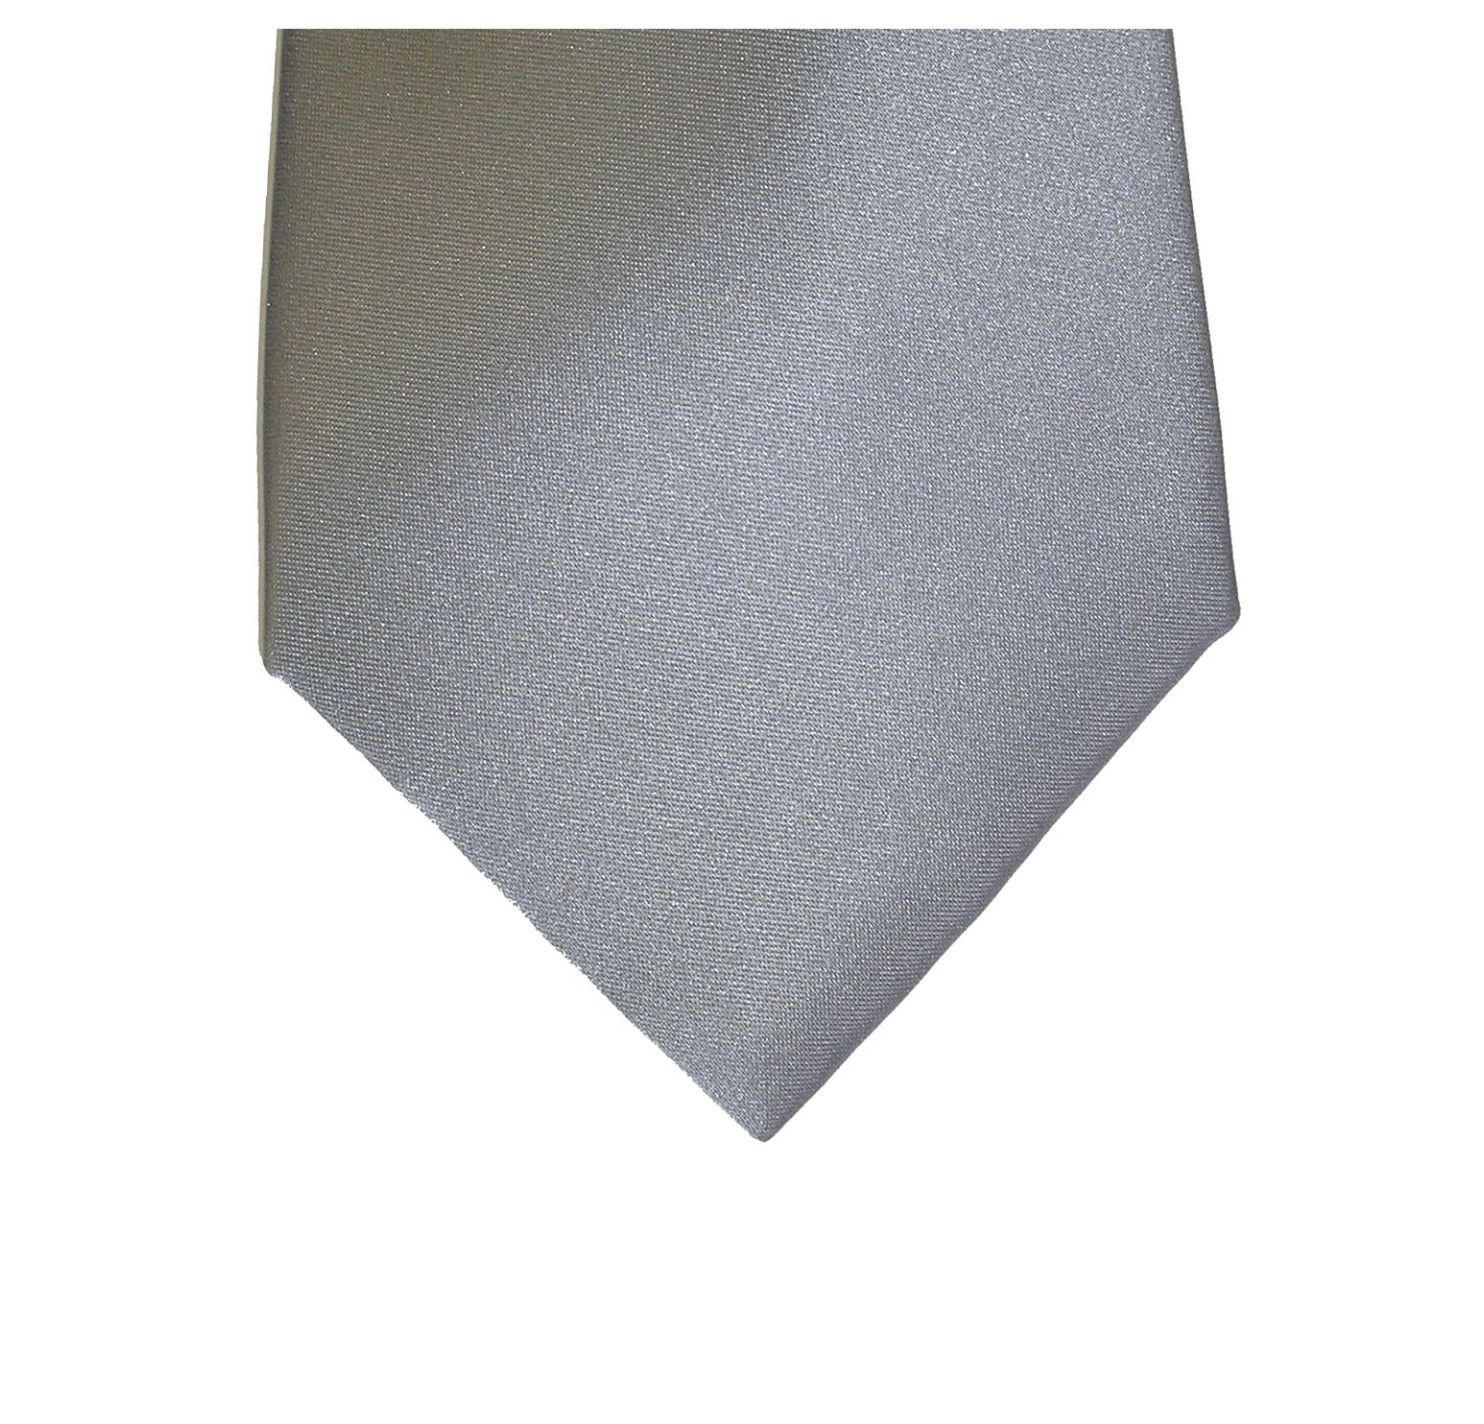 Wedding Tie in Polyester Plain Silver Grey